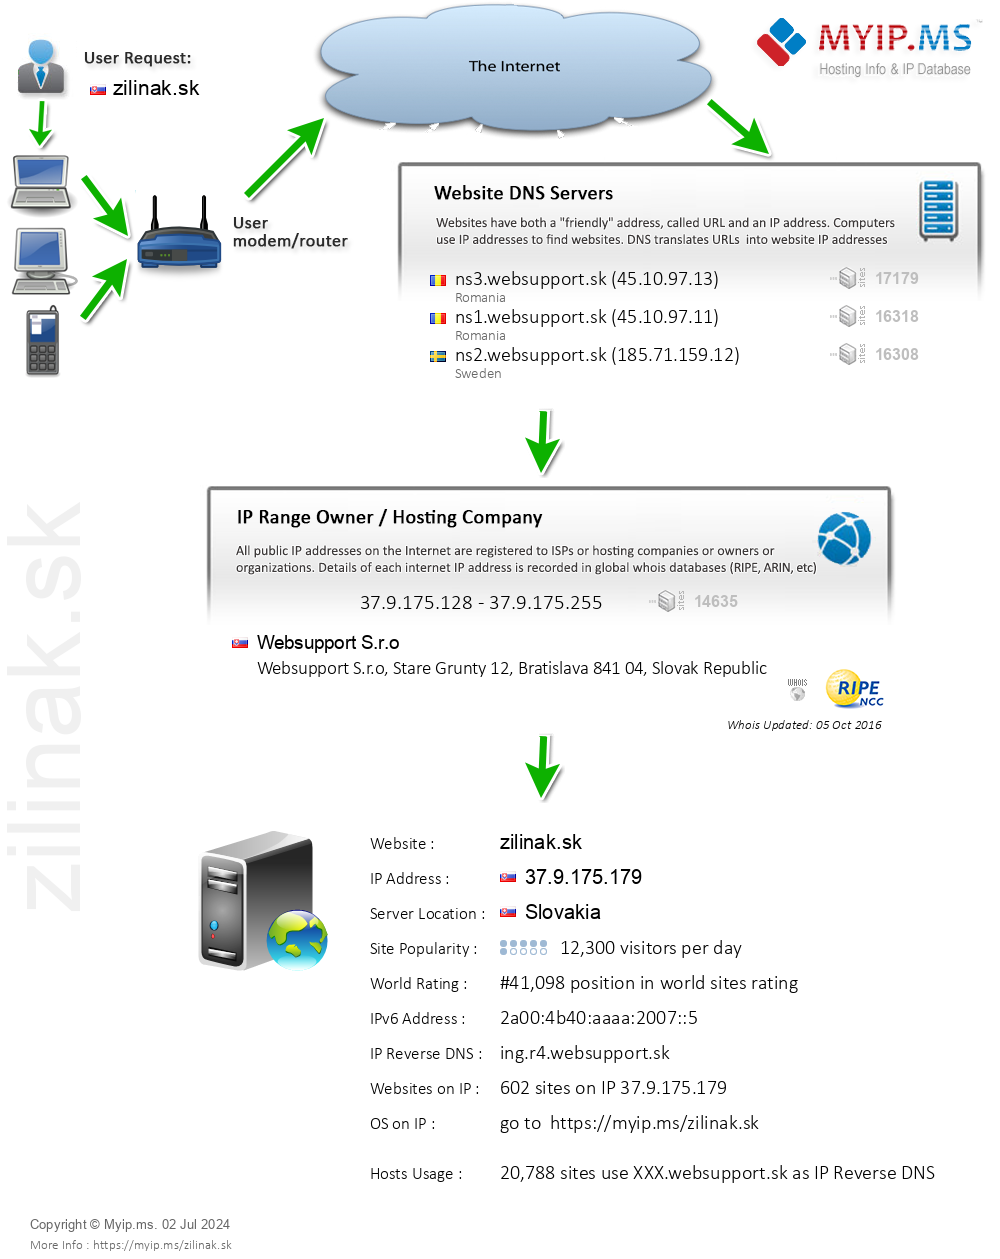 Zilinak.sk - Website Hosting Visual IP Diagram